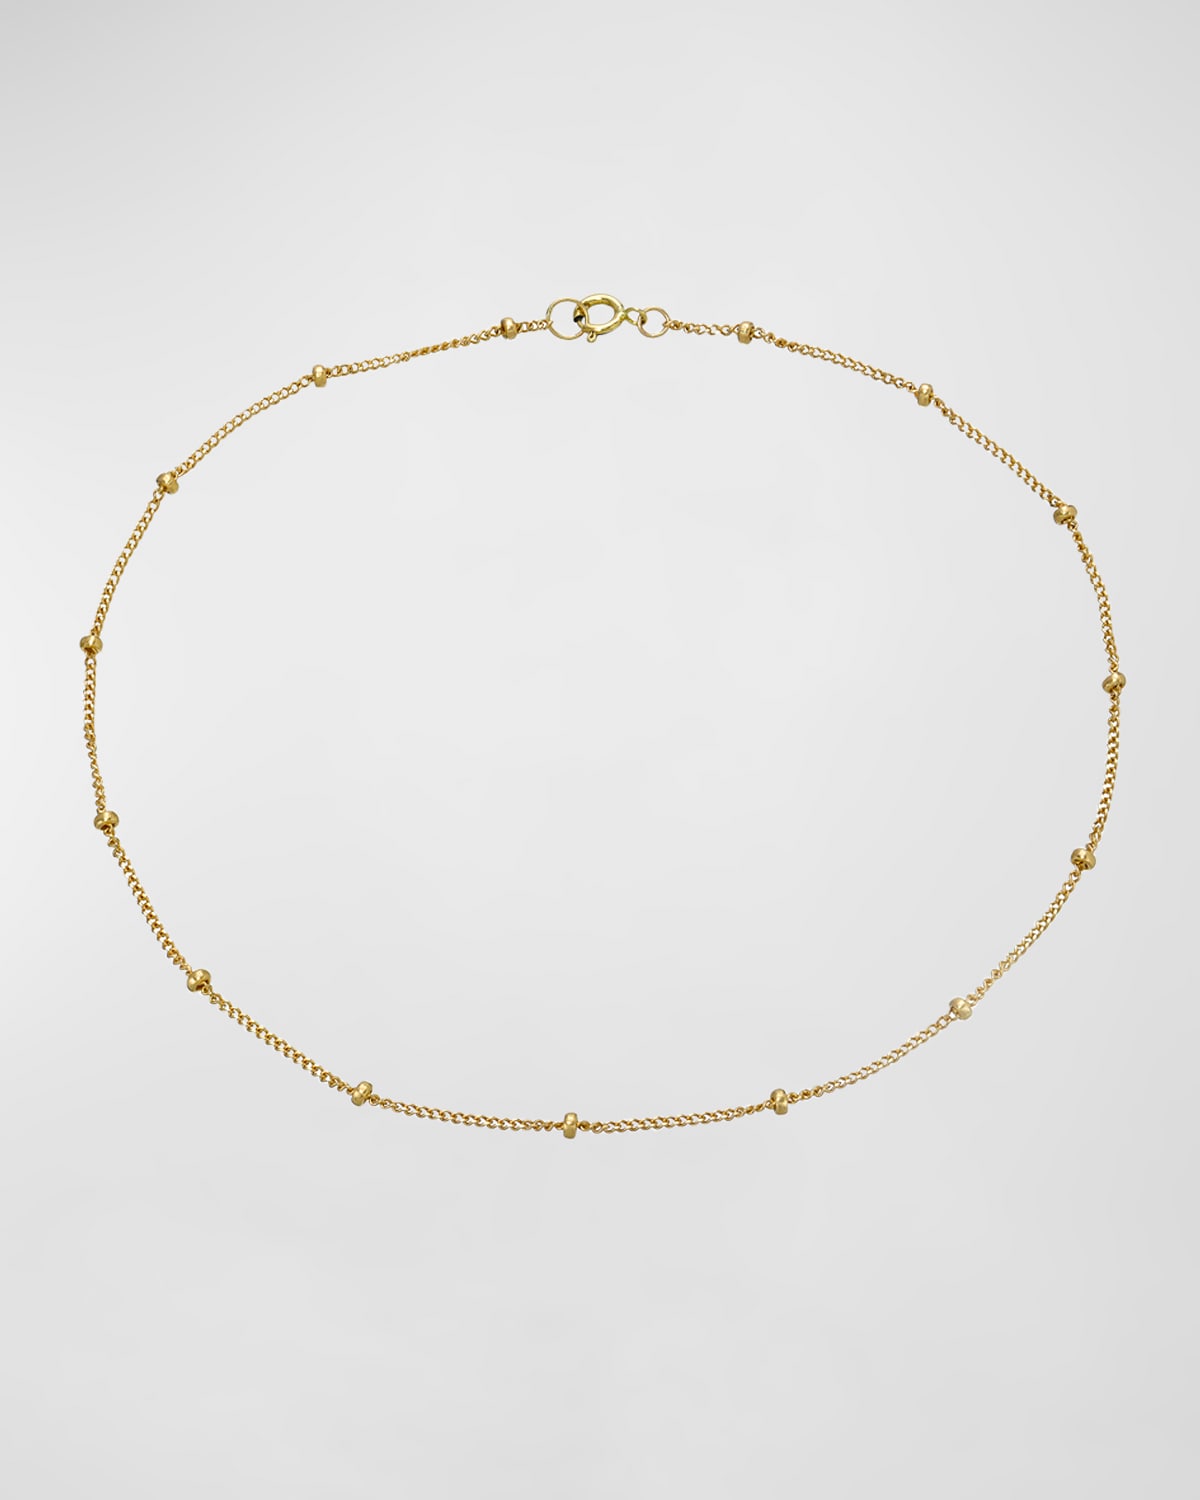 Zoe Lev Jewelry 14k Gold Segment Chain Anklet